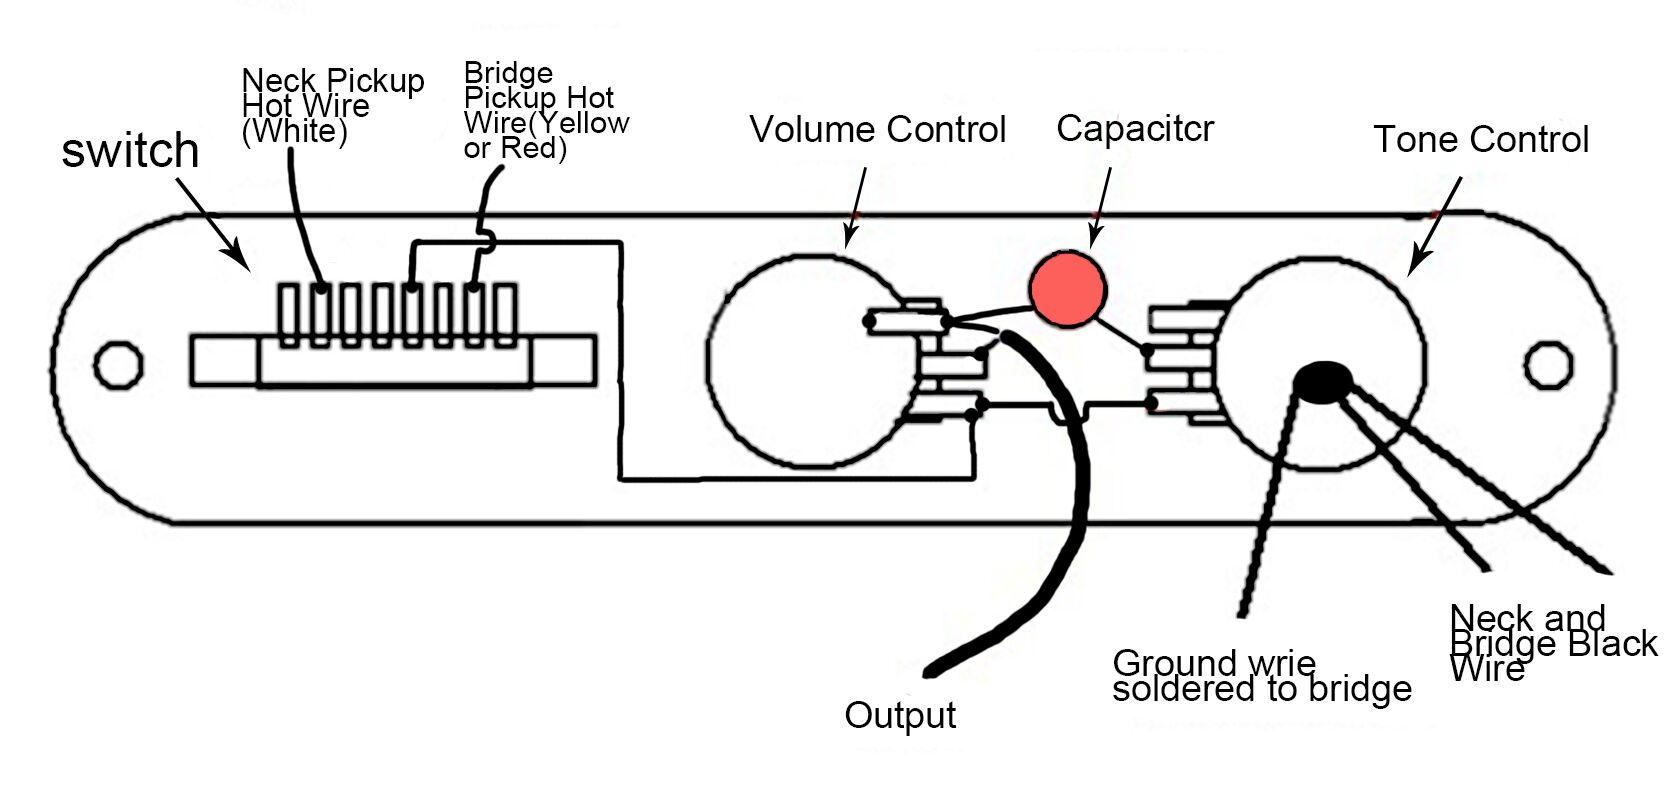 prewired telecaster control plate wiring diagram